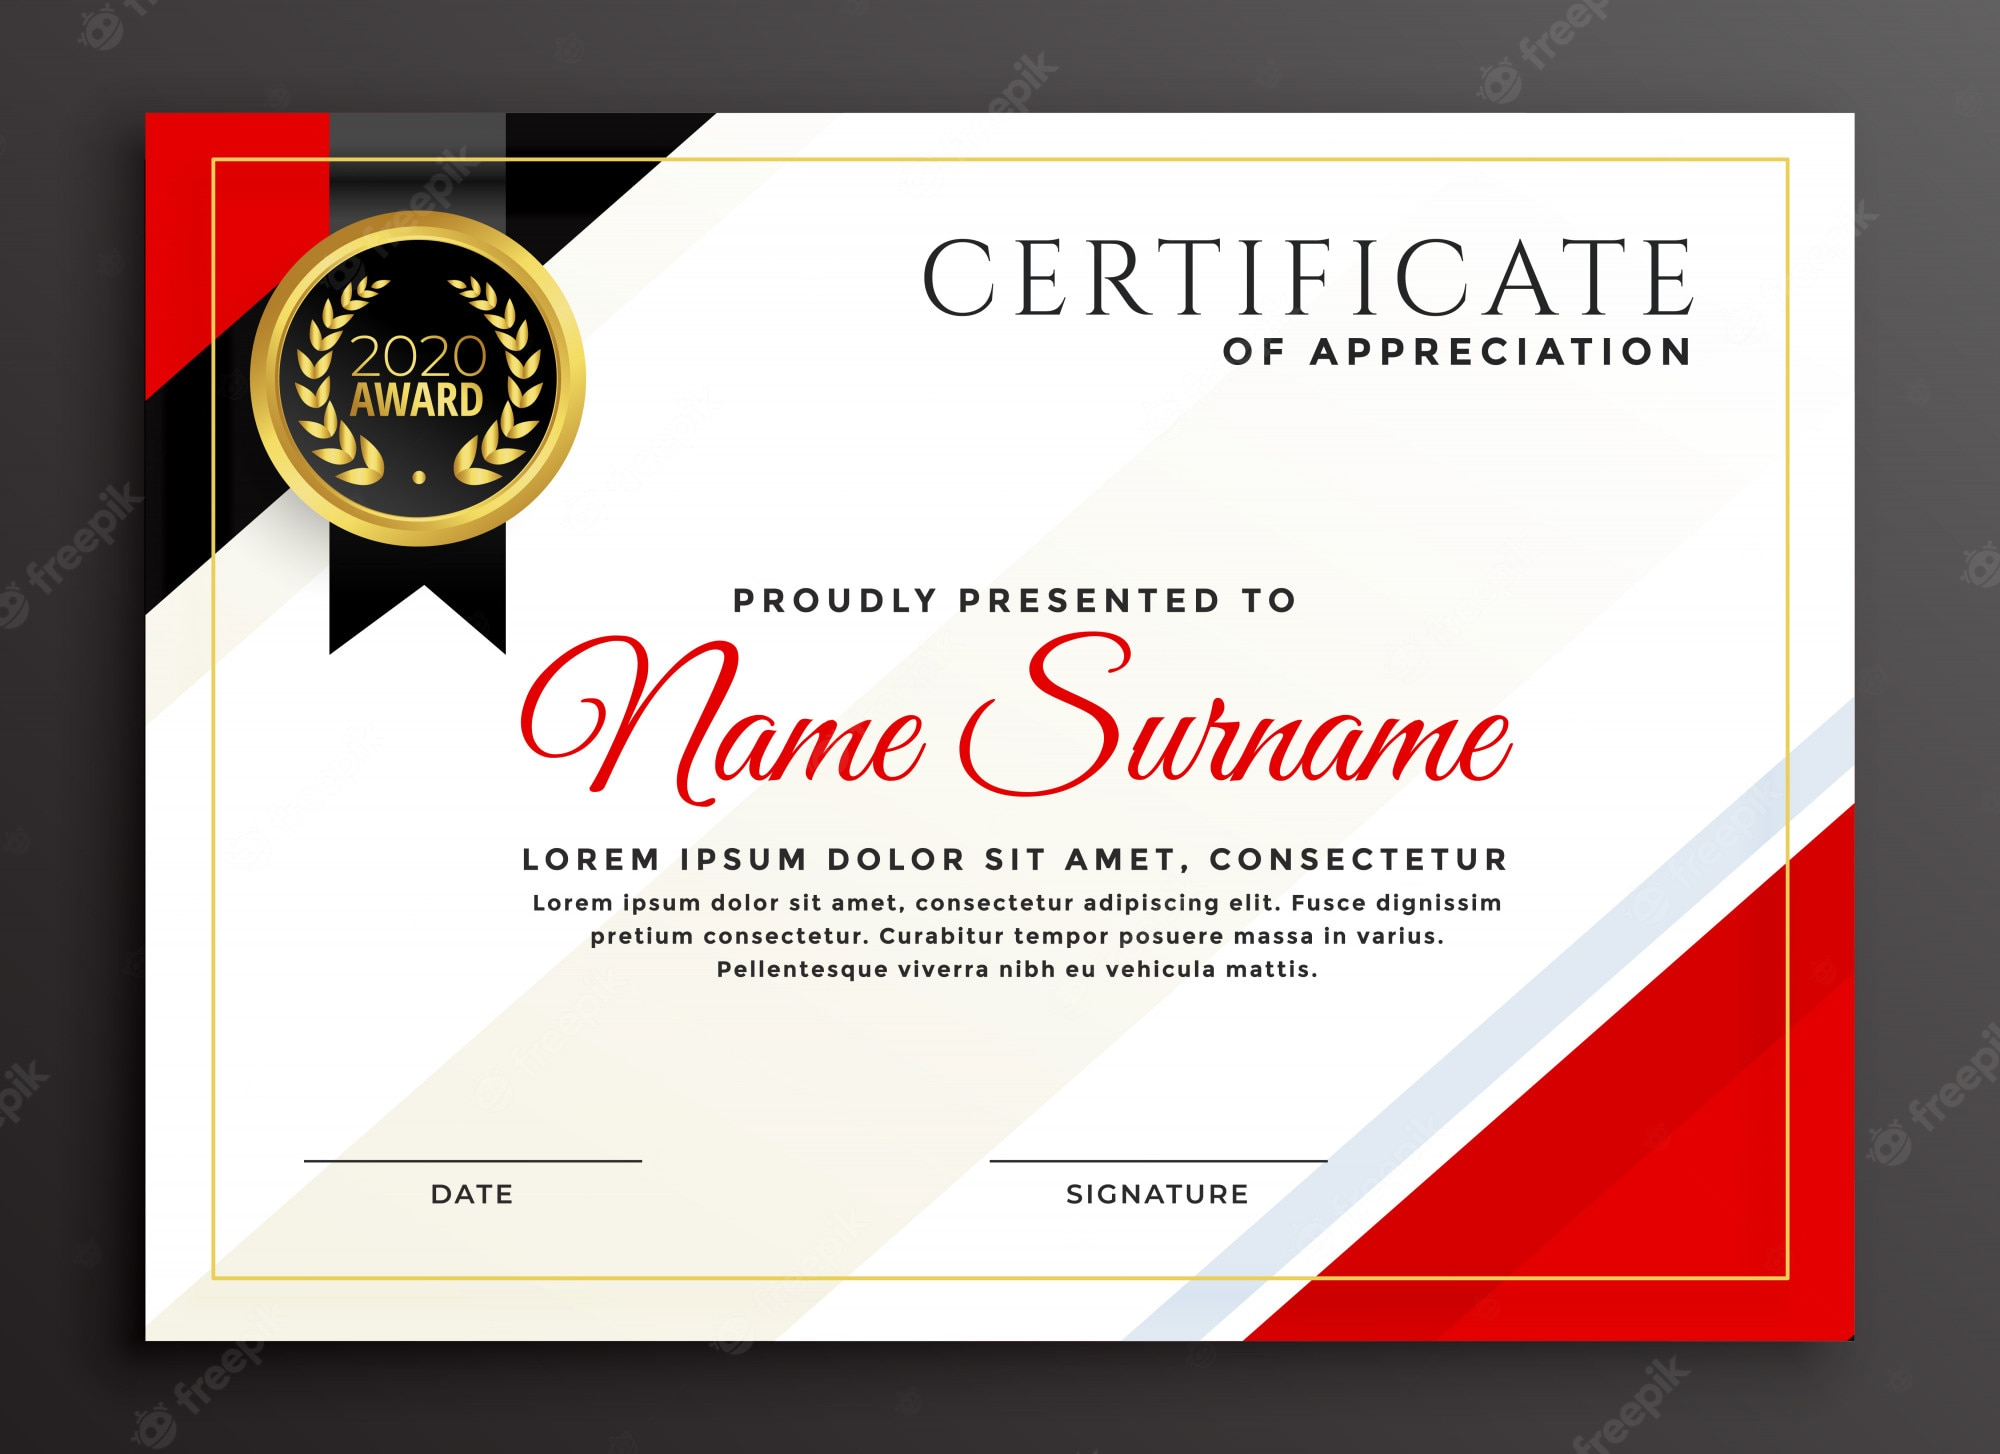 Templates Certificates Design Images  Free Vectors, Stock Photos  Regarding Winner Certificate Template